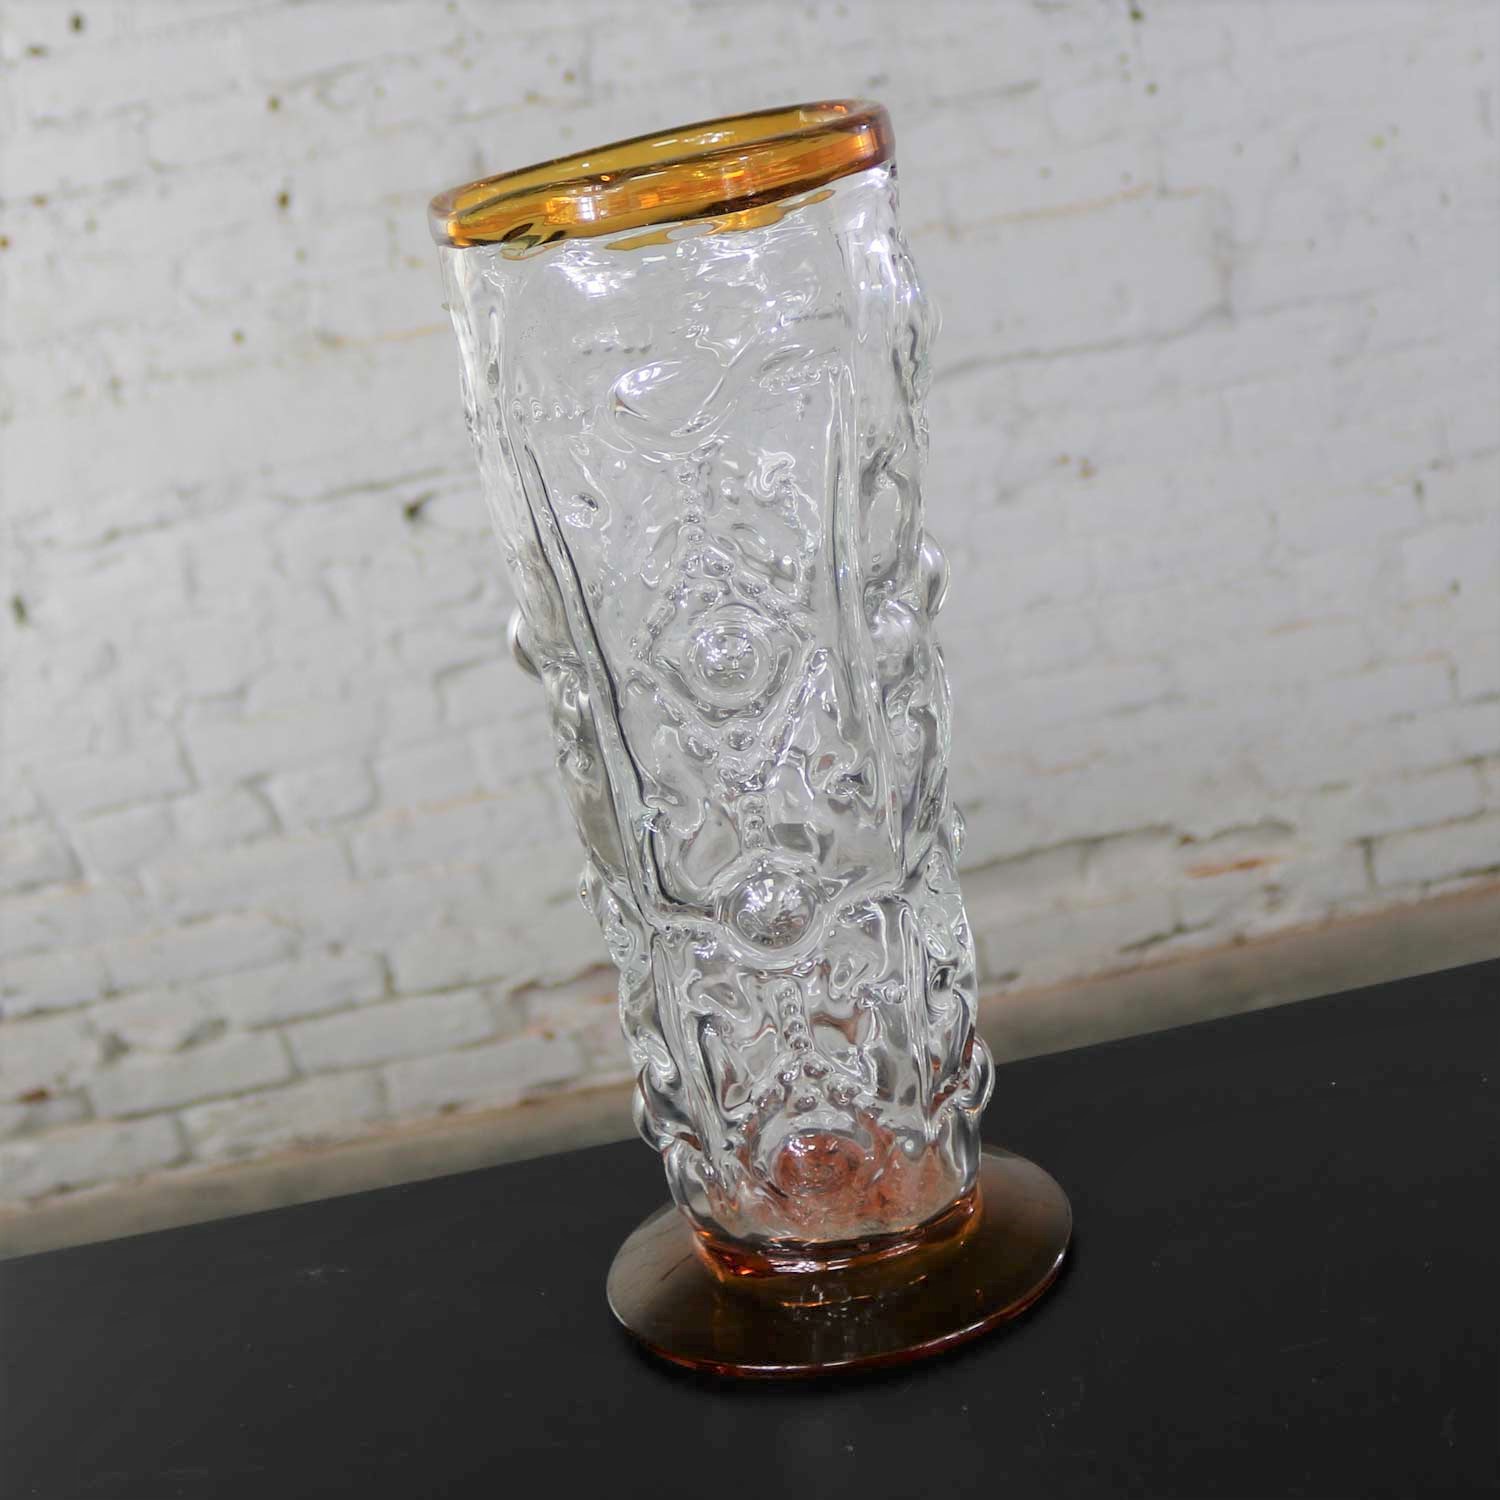 Blenko Hand Blown Glass Vase #9426 in Crystal and Topaz by Hank Adams